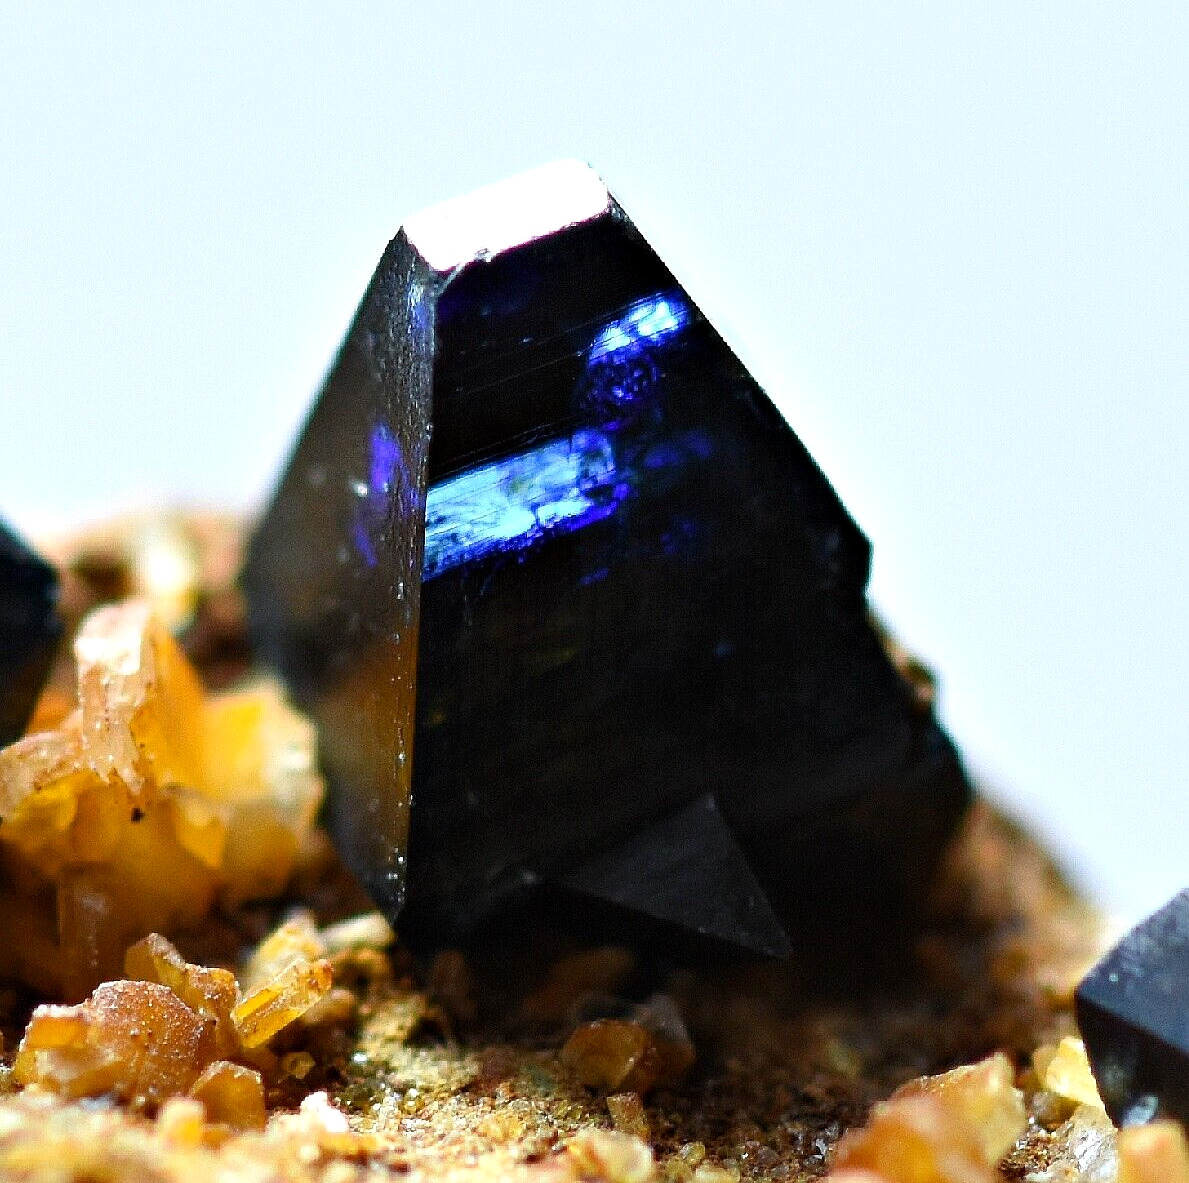 138 Carat Extremely Rare Full Terminated Blue Shaded Anatase Crystals On Matrix